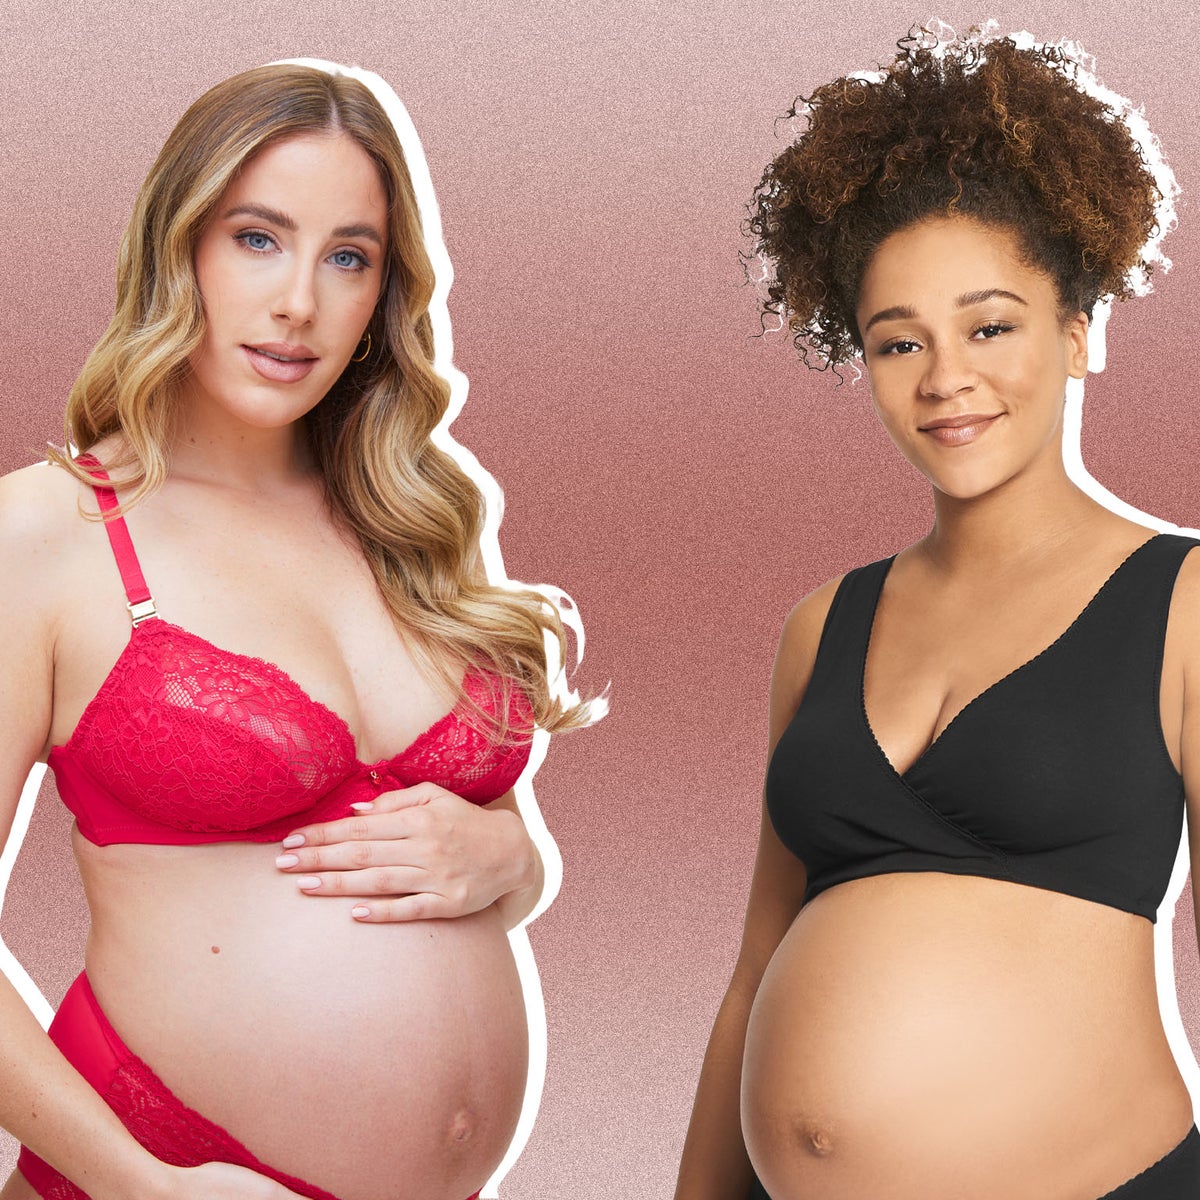 Wearing Bra during Breastfeeding: Is It Safe?